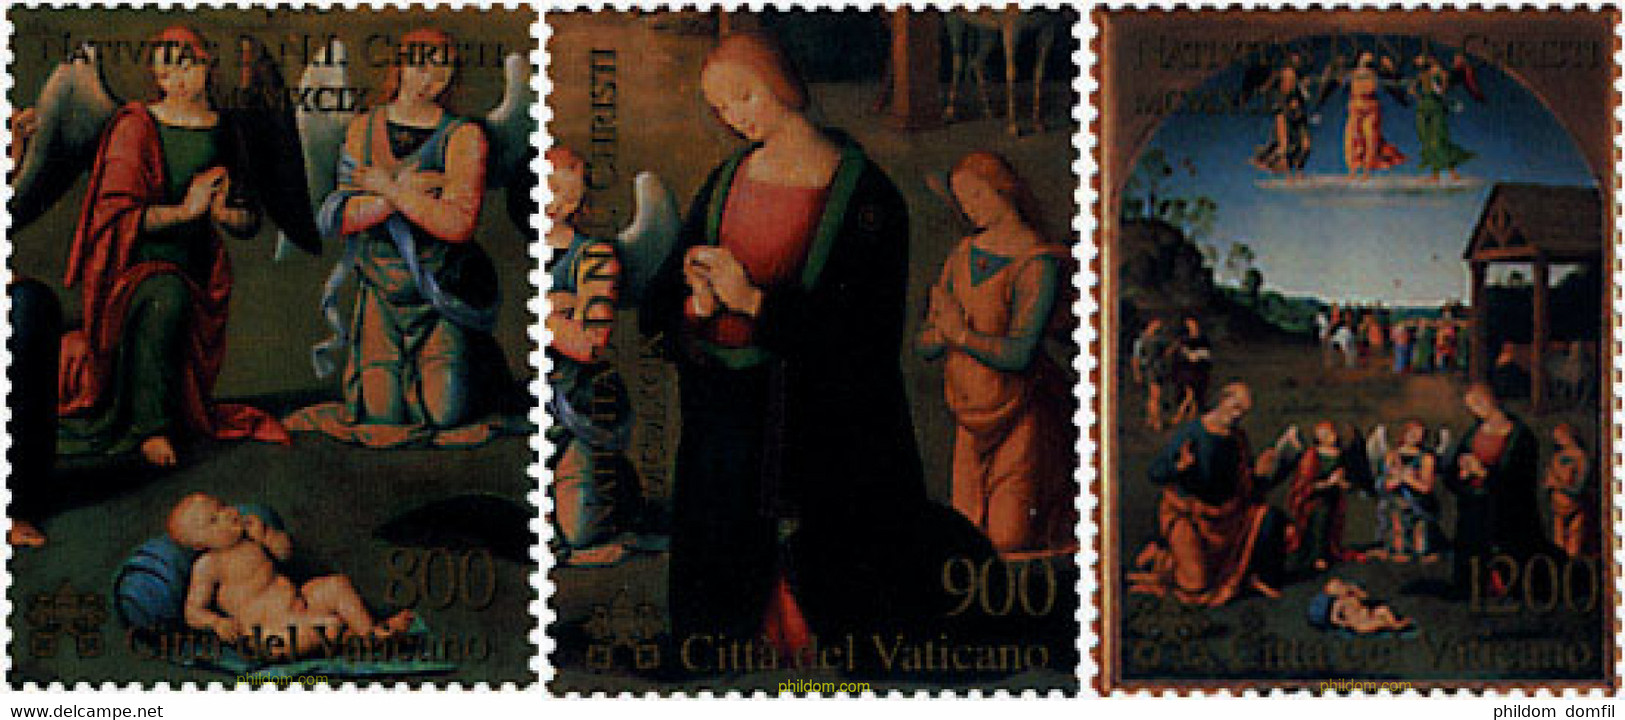 687826 MNH VATICANO 1999 NAVIDAD - Used Stamps